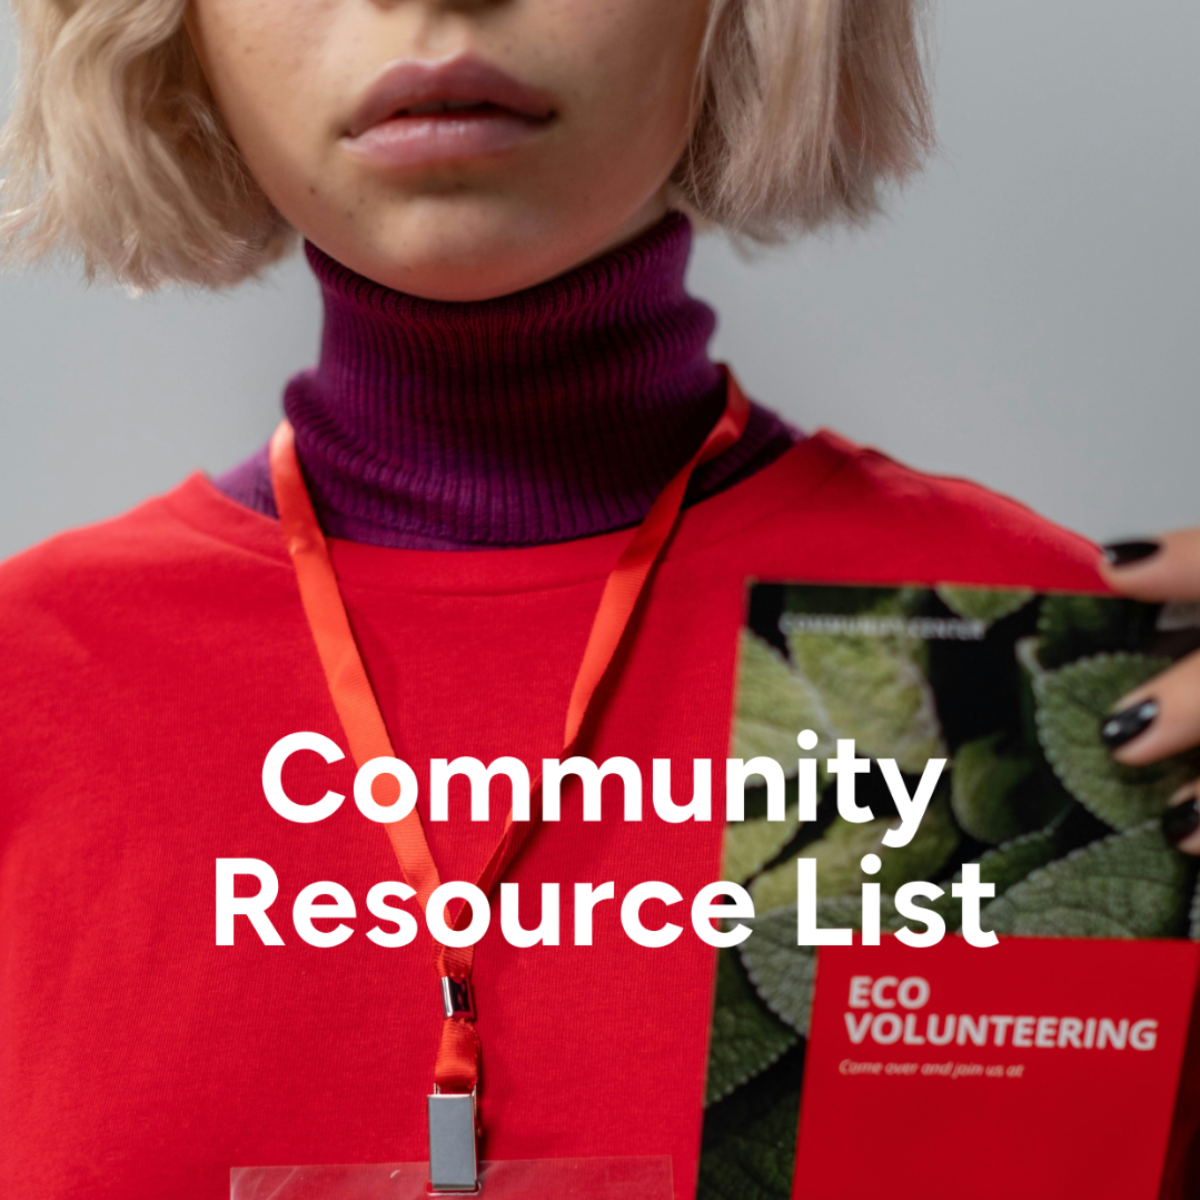 Community Resource List Template